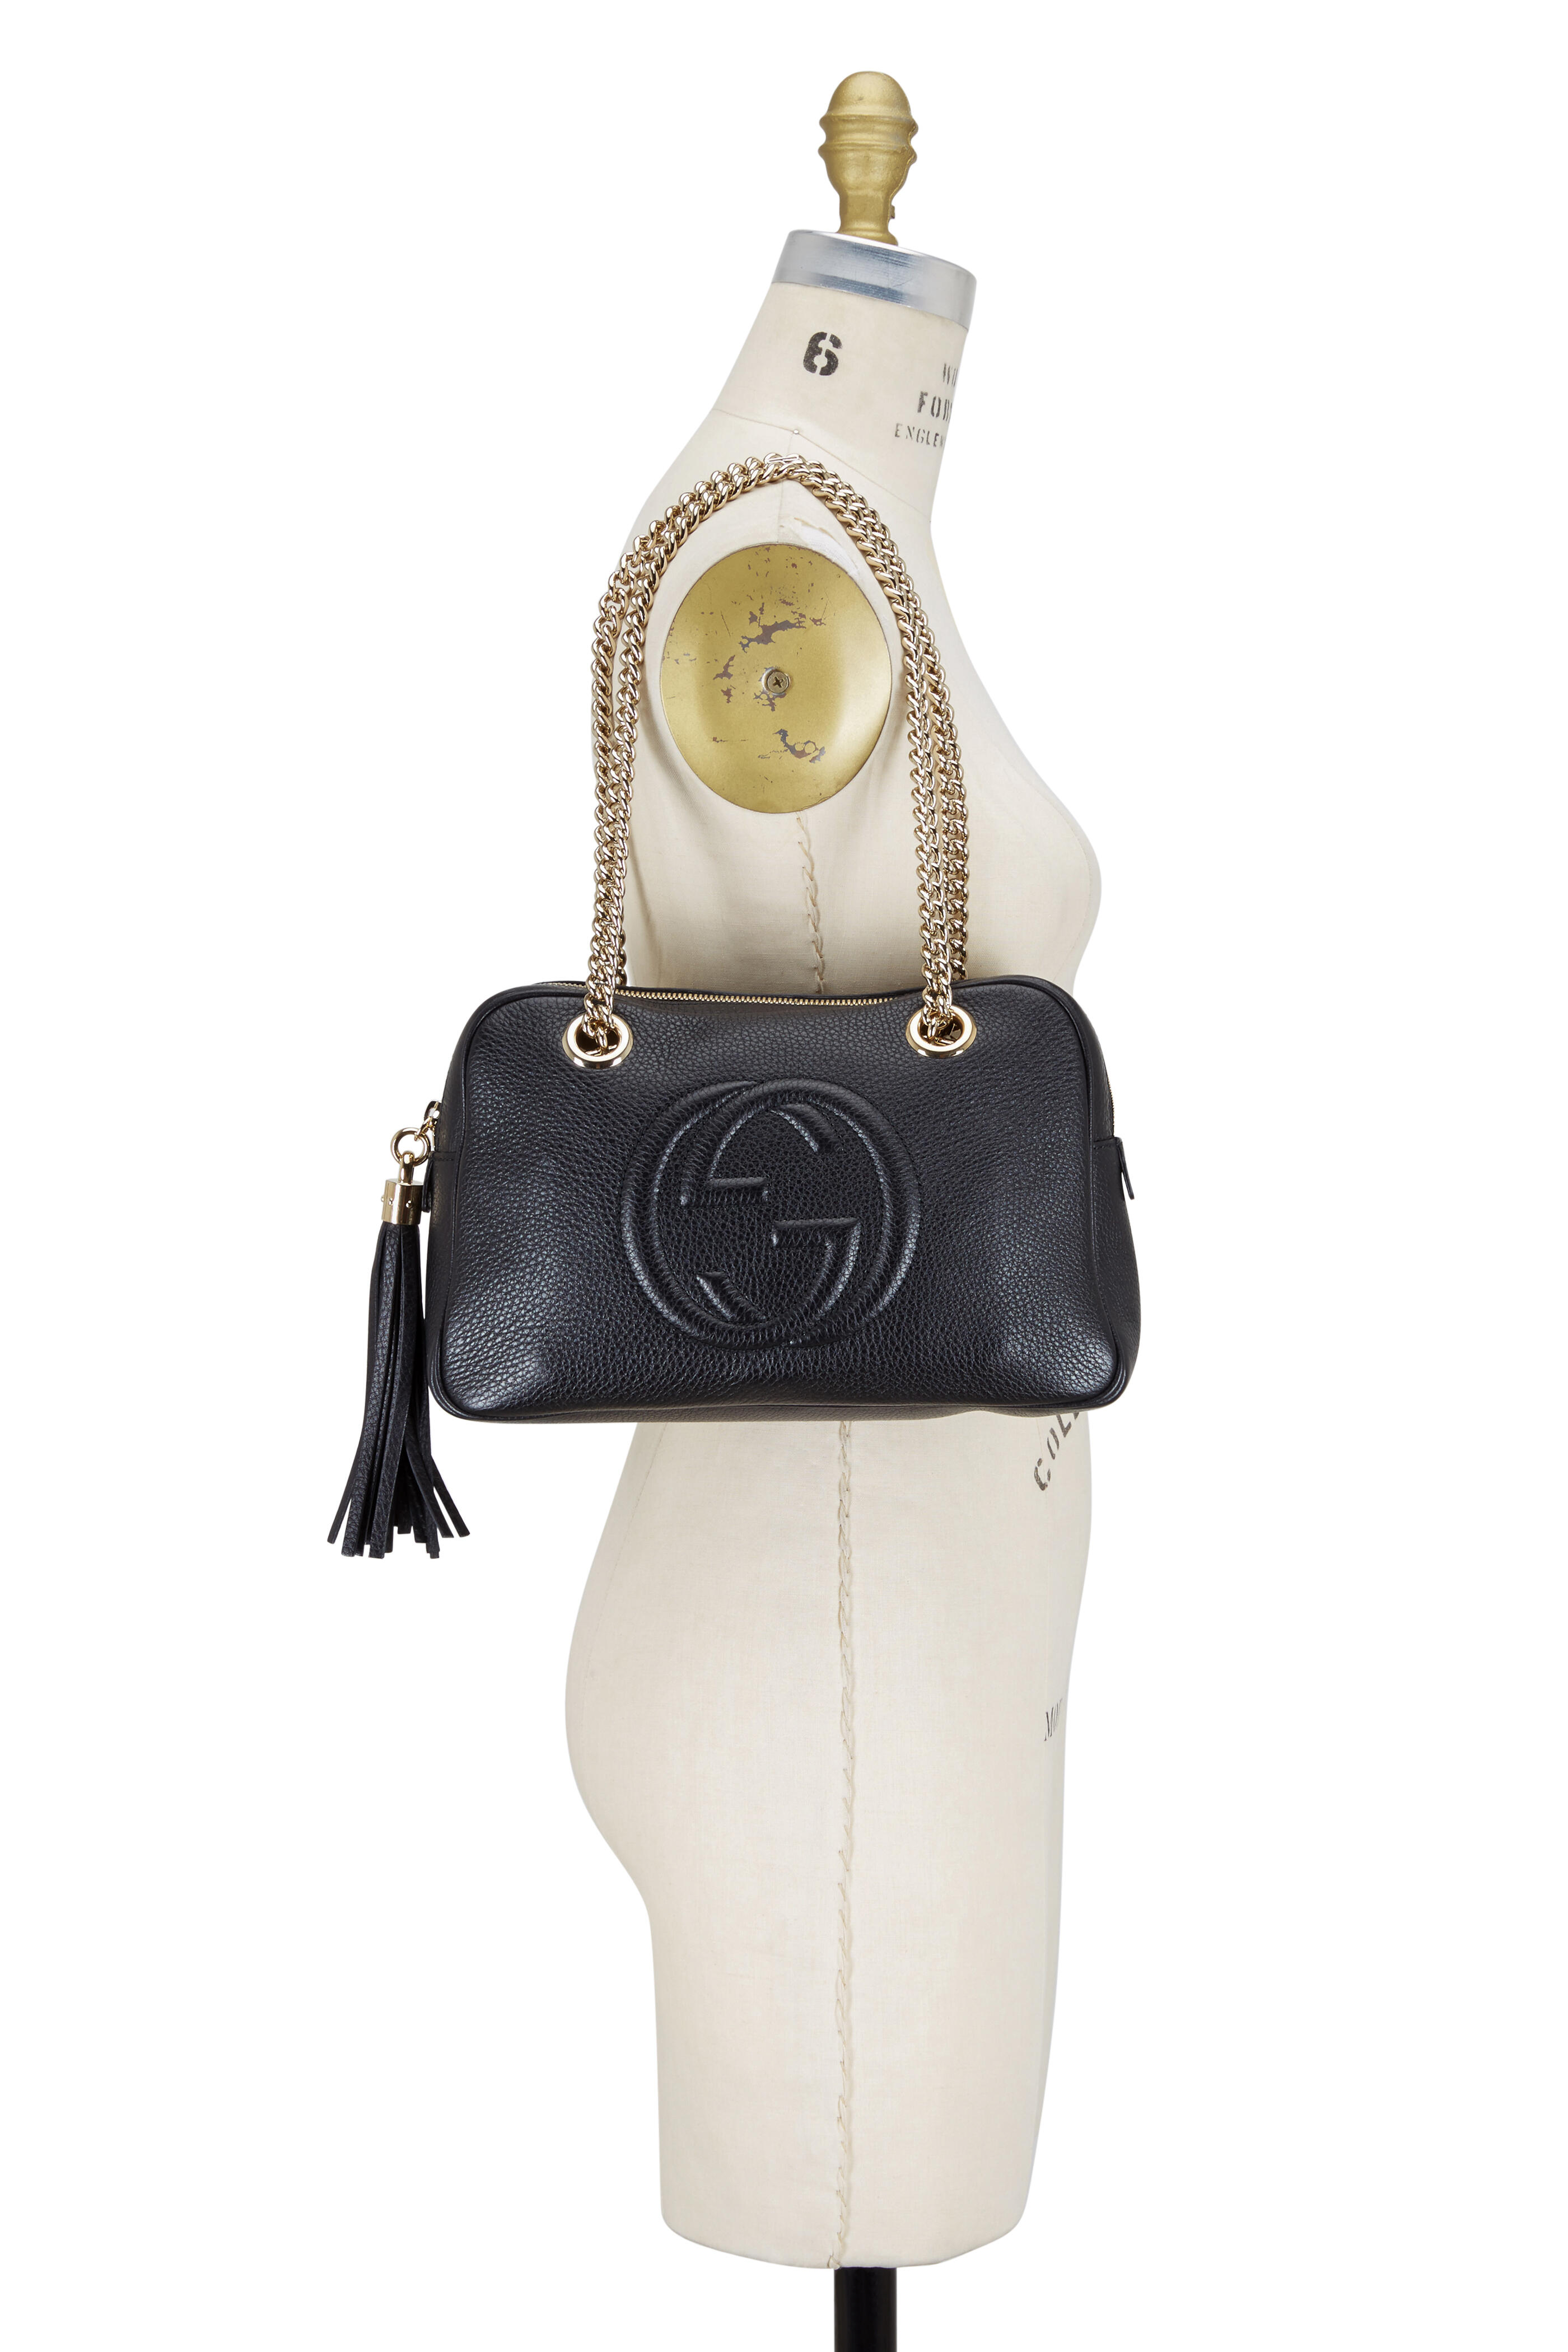 Gucci Soho Large Leather Chain Shoulder Handbag Black BHFO 5480